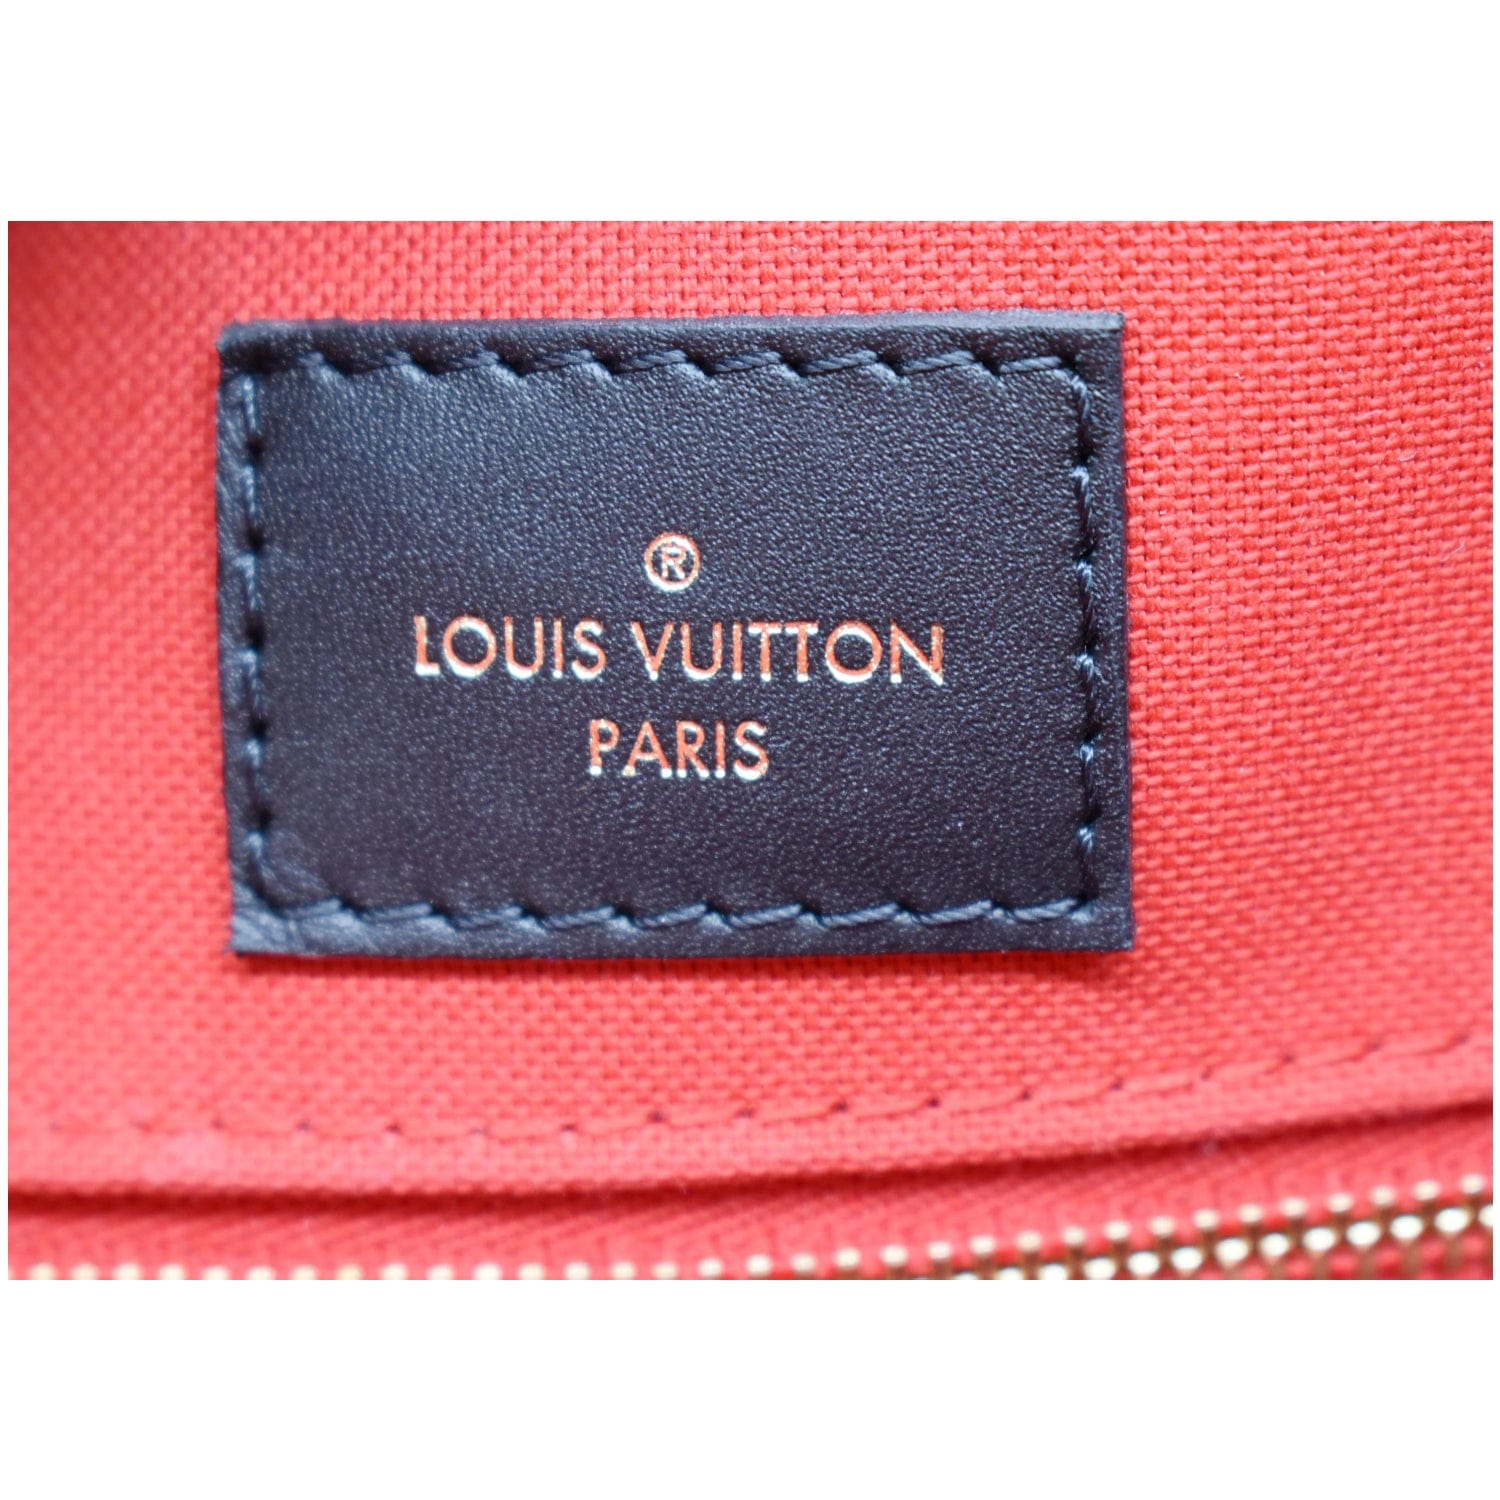 Louis Vuitton ONTHEGO Tote Giant Brown Monogram bag 2019 ON THE GO M44576